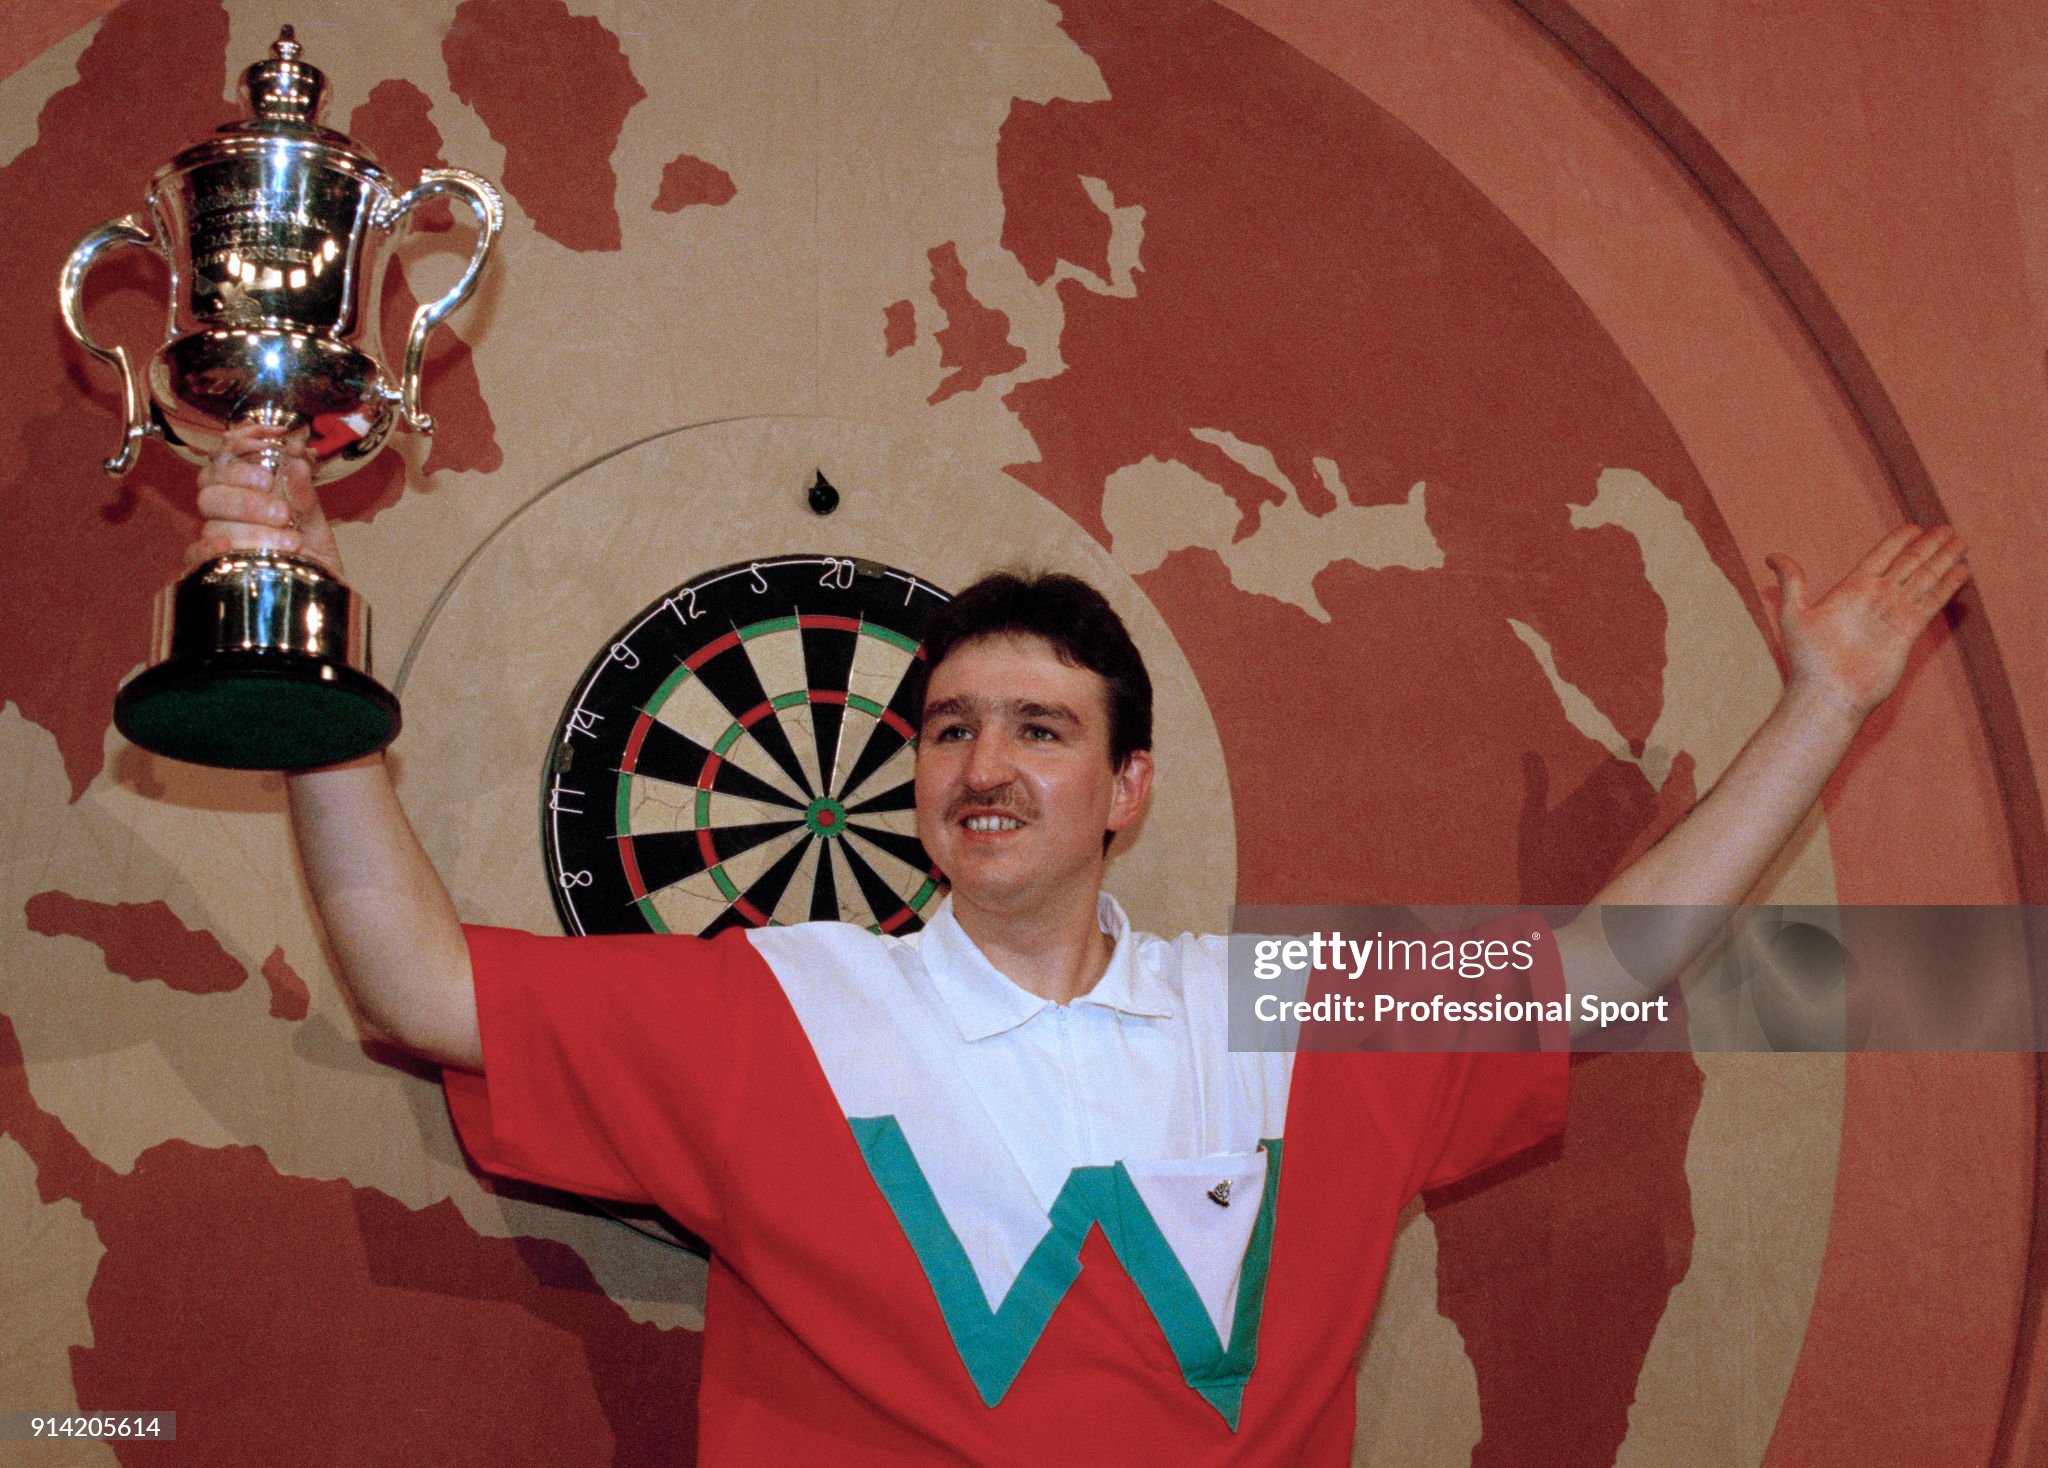 richie-burnett-of-wales-holds-aloft-the-trophy-after-winning-the-embassy-world-darts.jpg